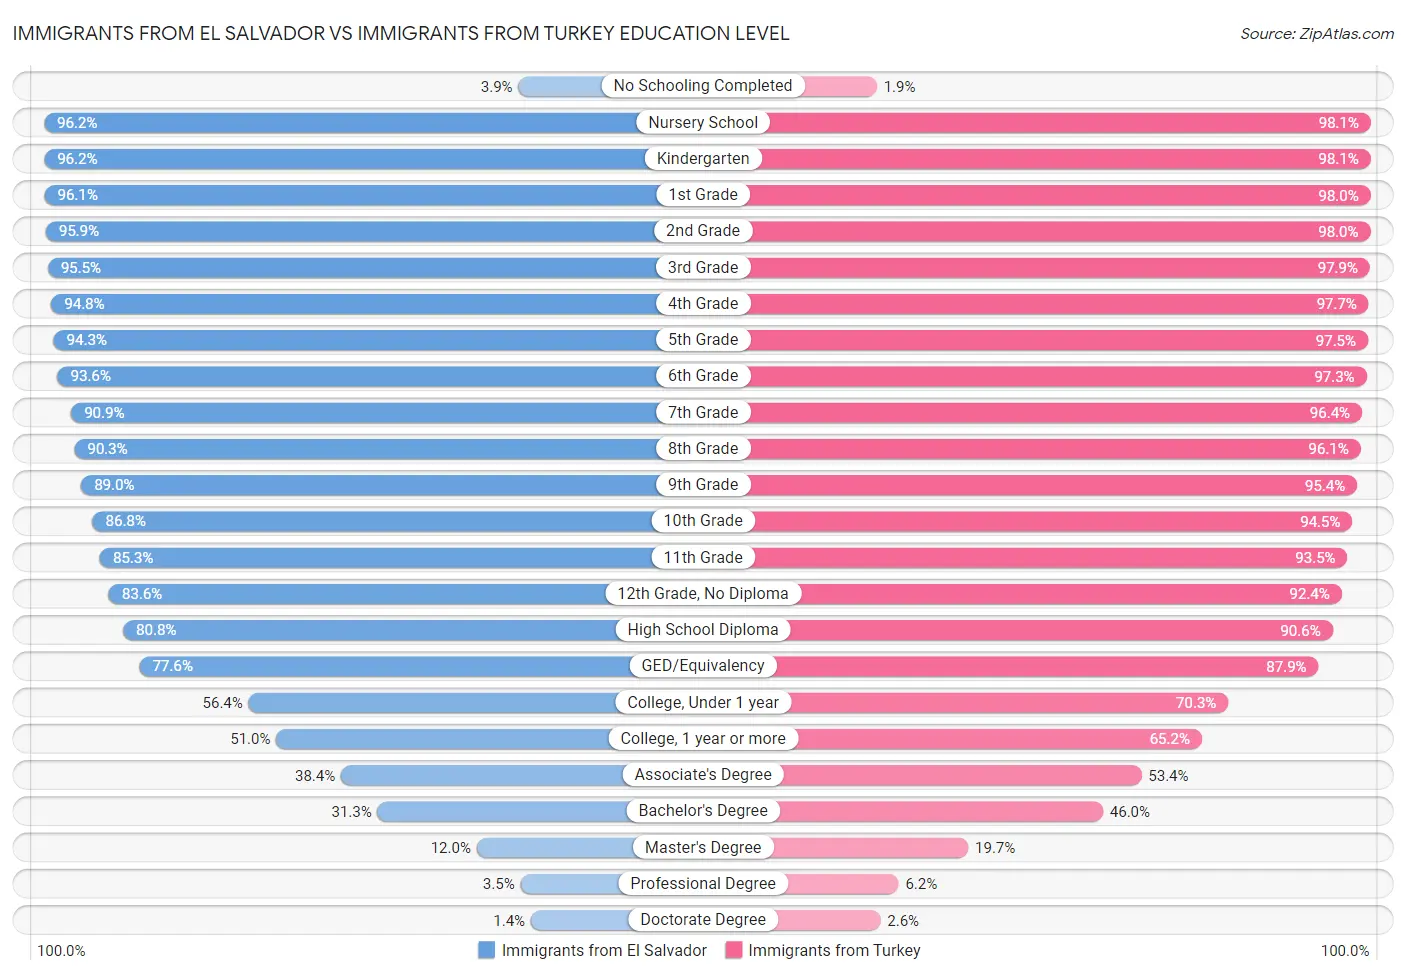 Immigrants from El Salvador vs Immigrants from Turkey Education Level